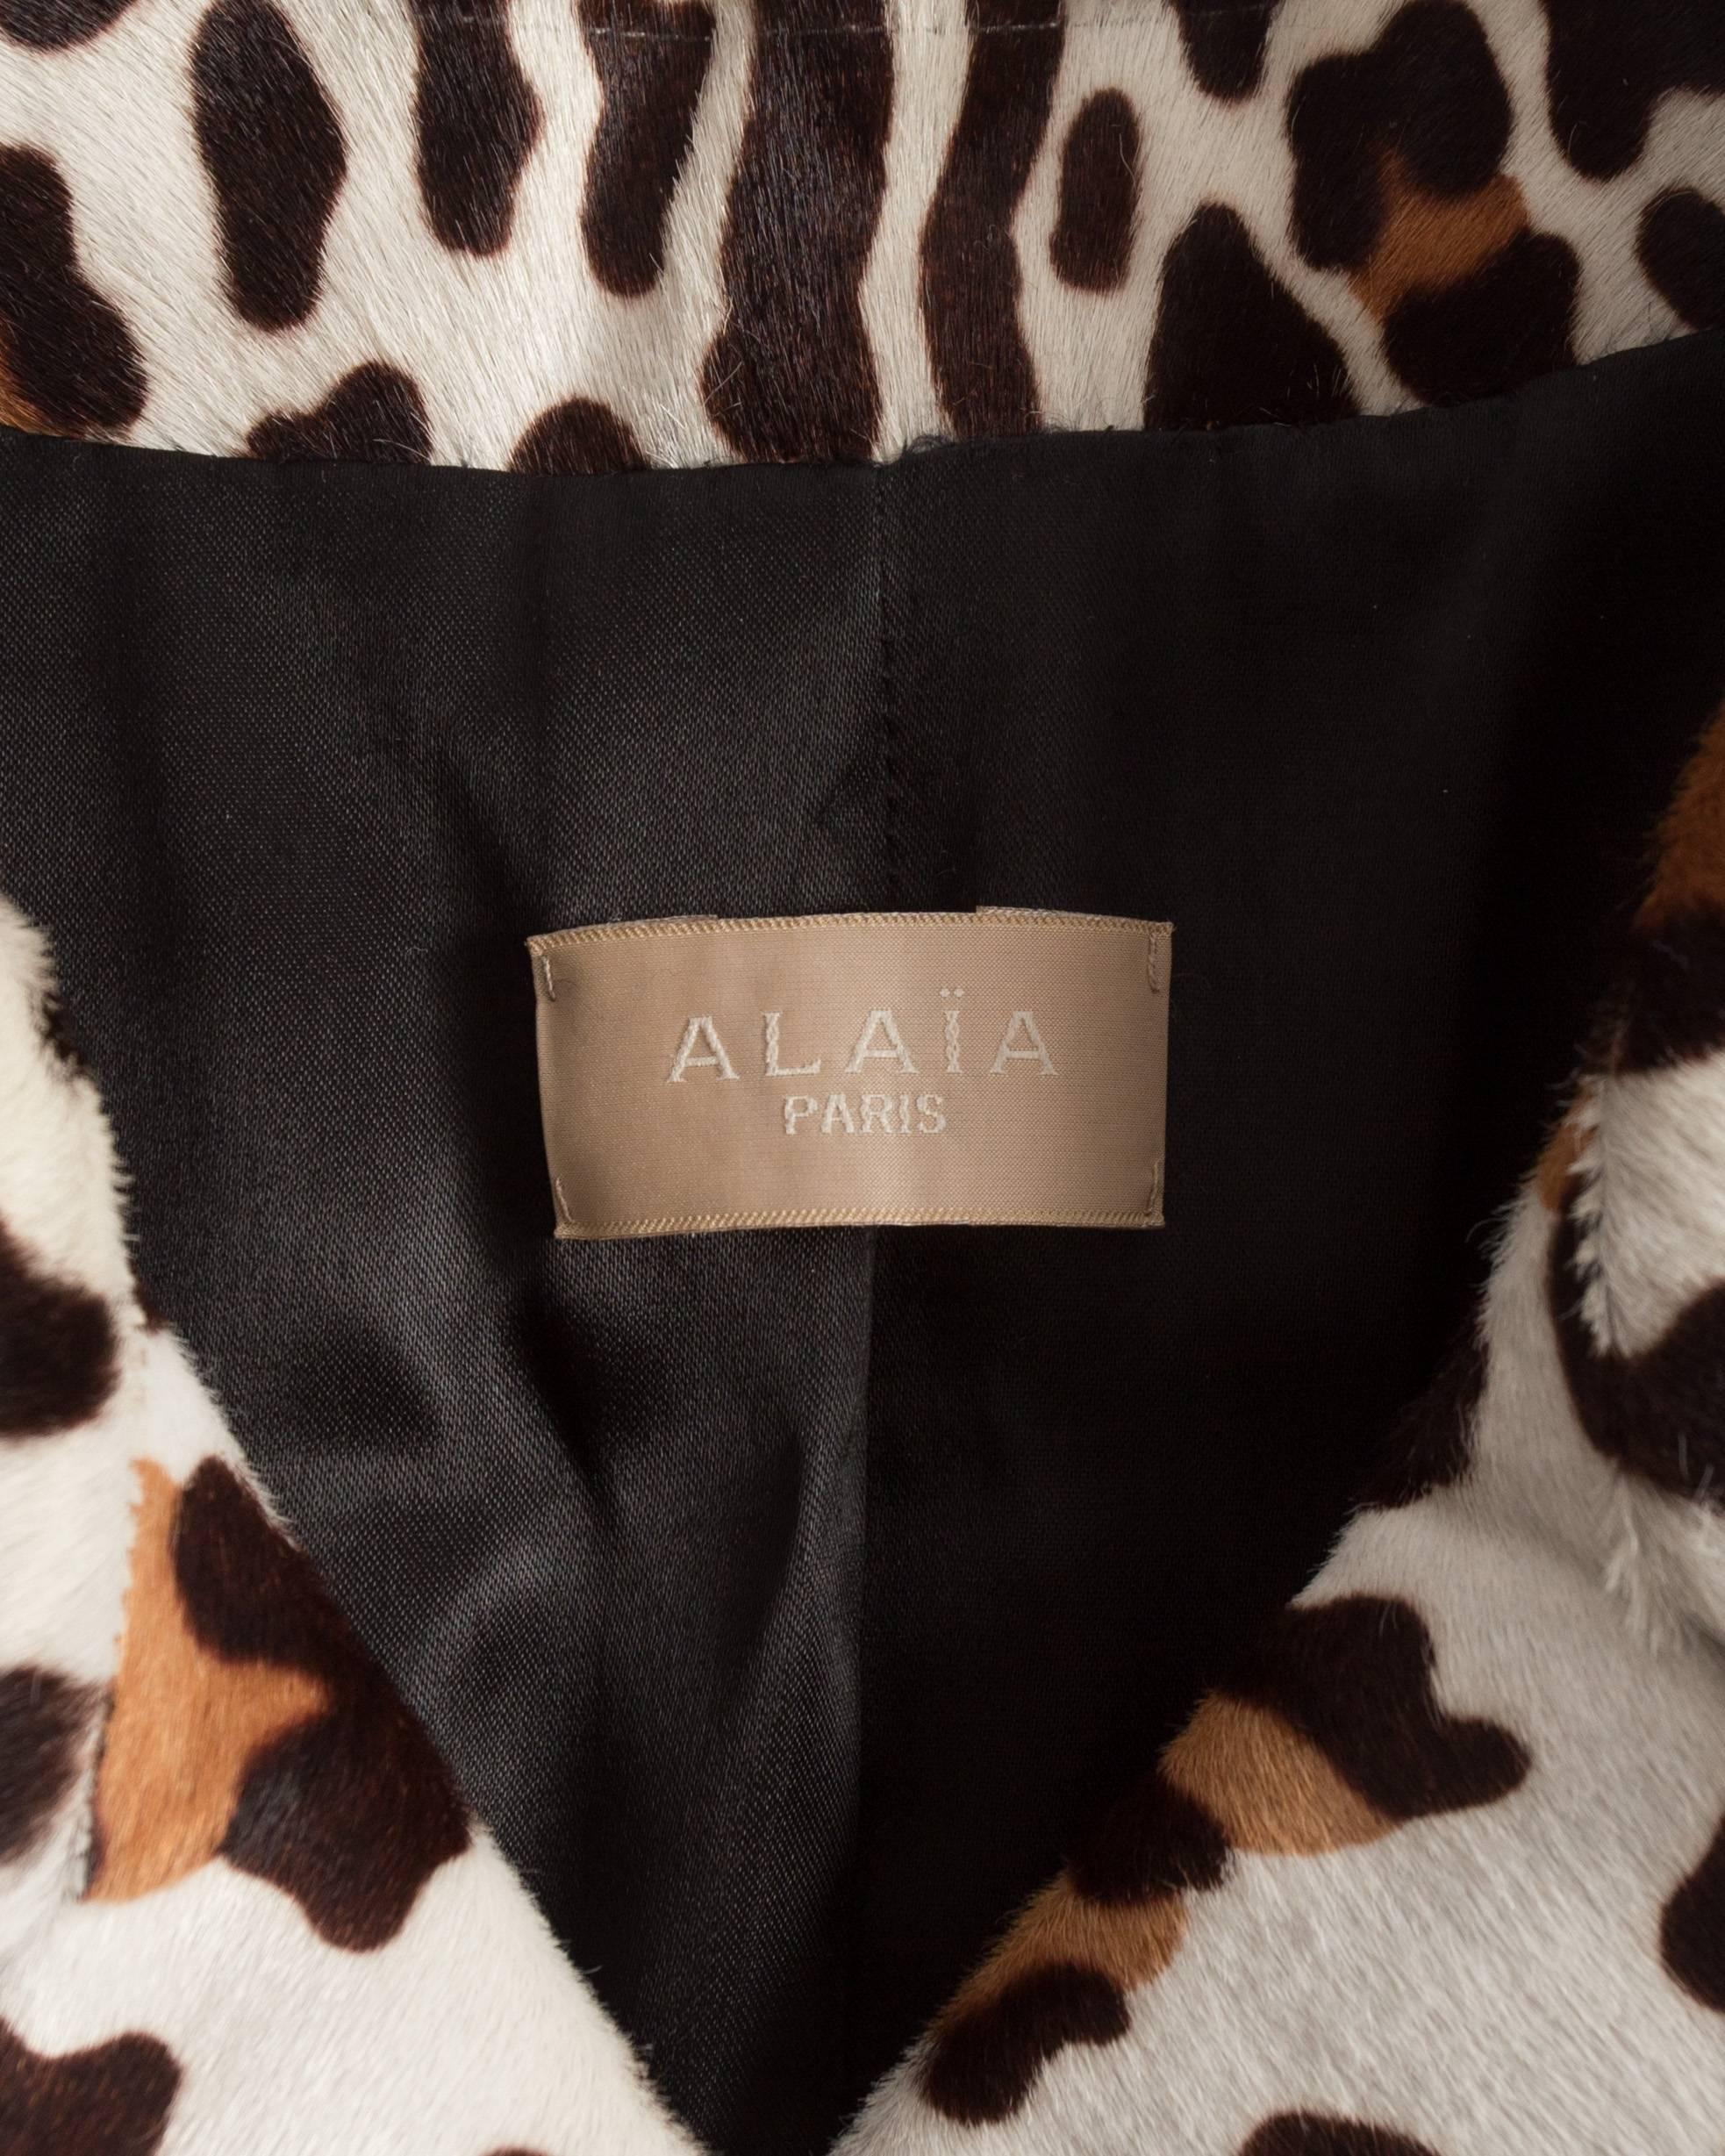 Alaia pony hair leopard print coat and boots ensemble, c. 2010 For Sale 2